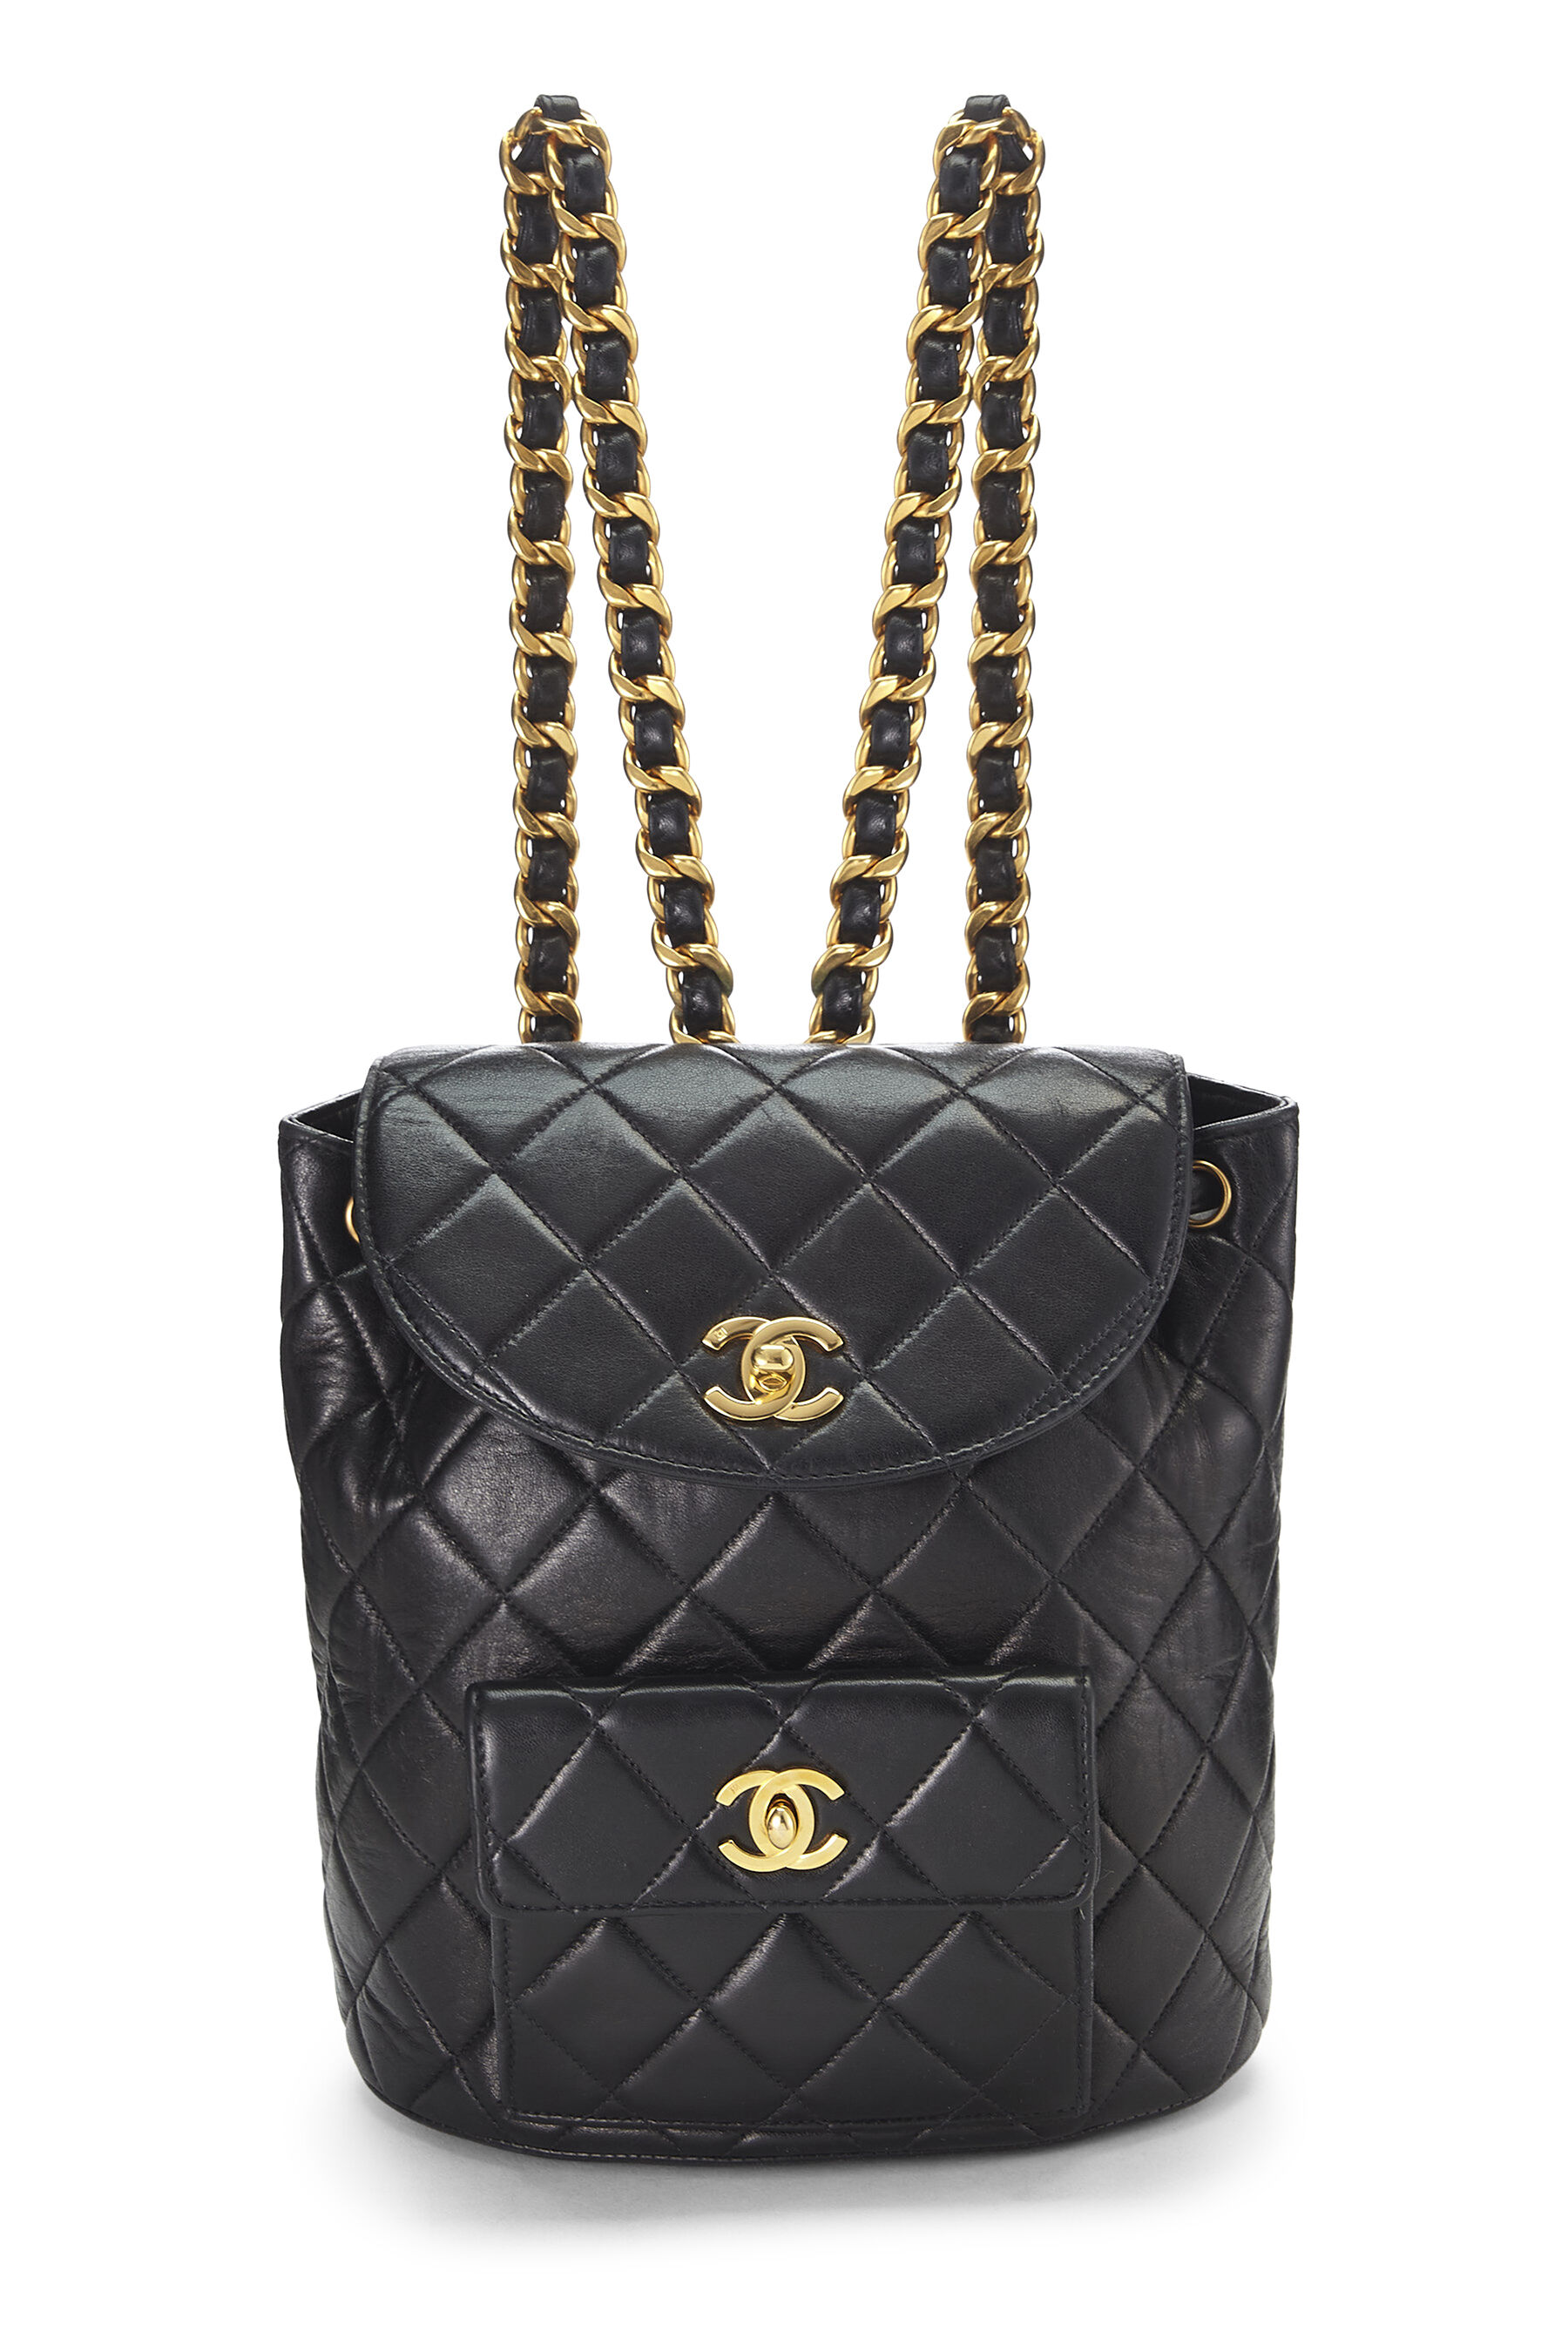 Chanel Black Quilted Lambskin Classic Backpack Q6B0NE1IK7119